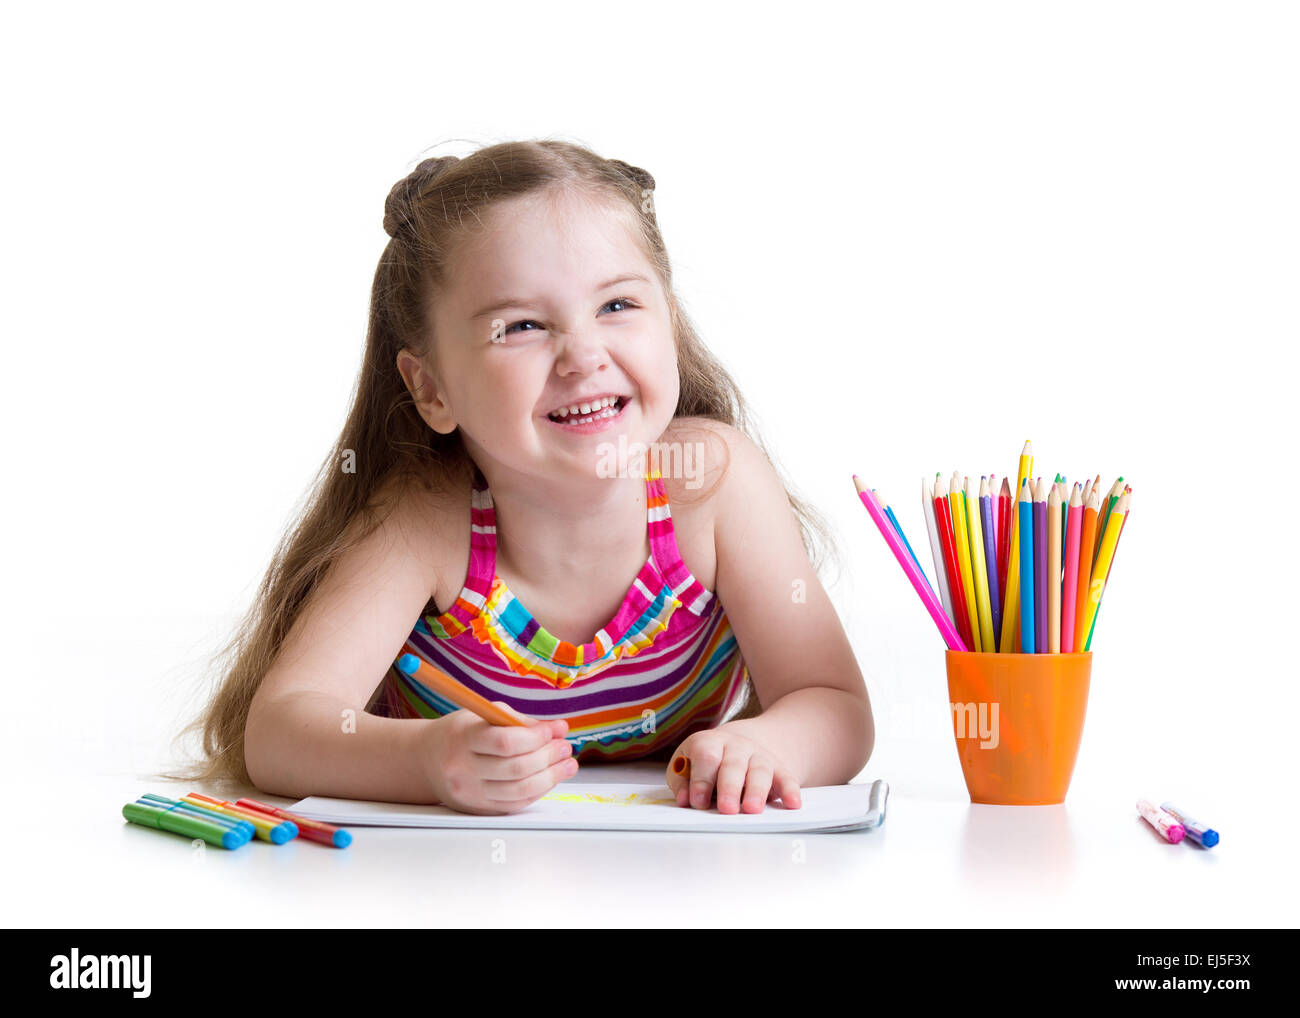 Happy little girl drawing with felt-tip pen in preschool Stock Photo